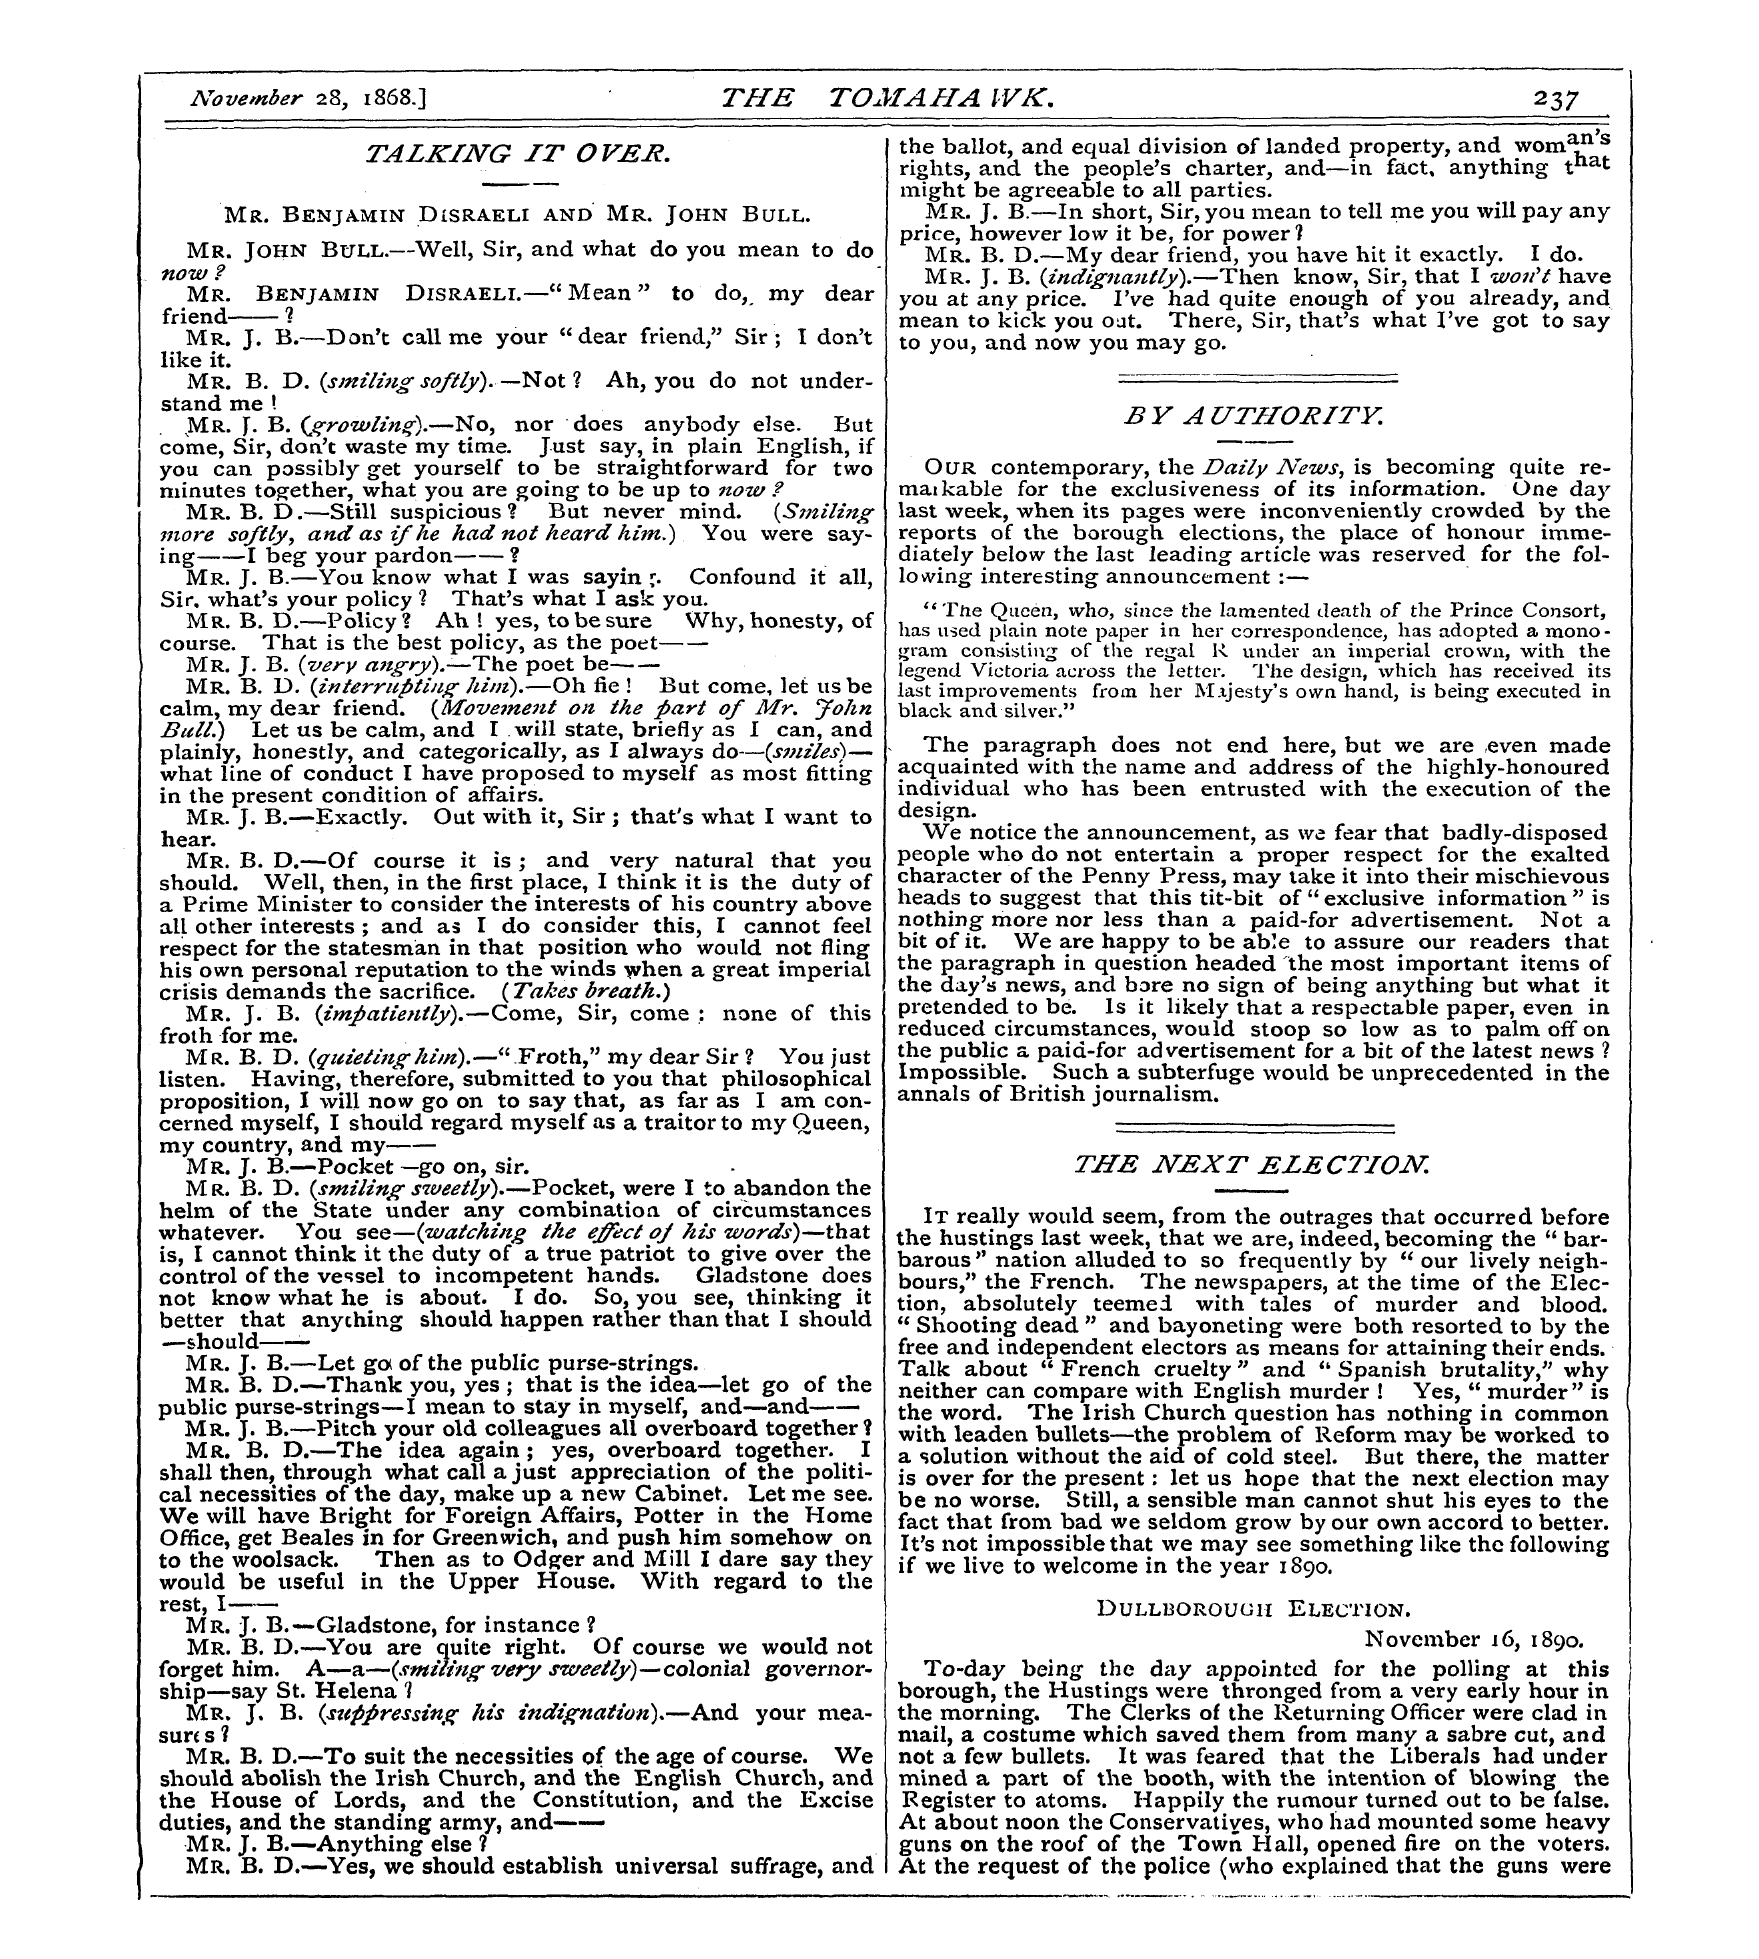 Tomahawk (1867-1870): jS F Y, 1st edition: 9